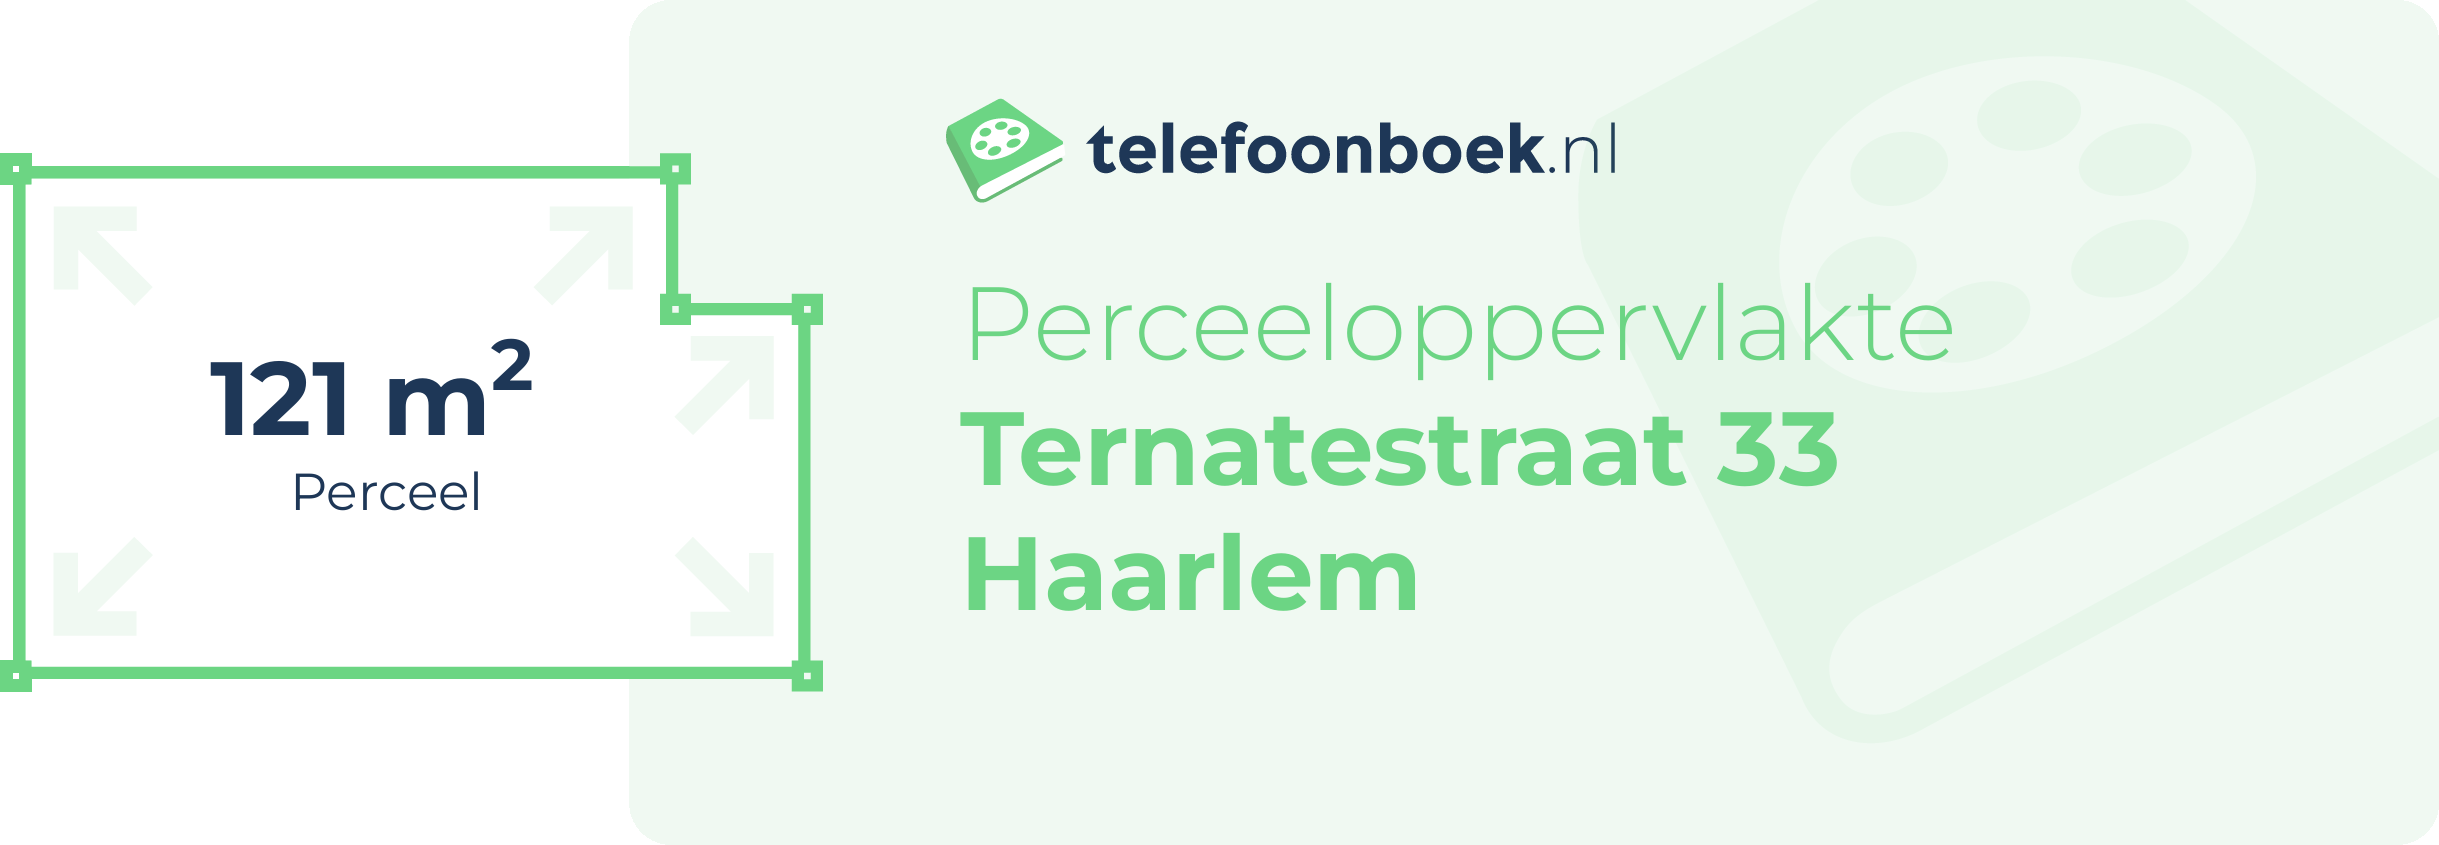 Perceeloppervlakte Ternatestraat 33 Haarlem